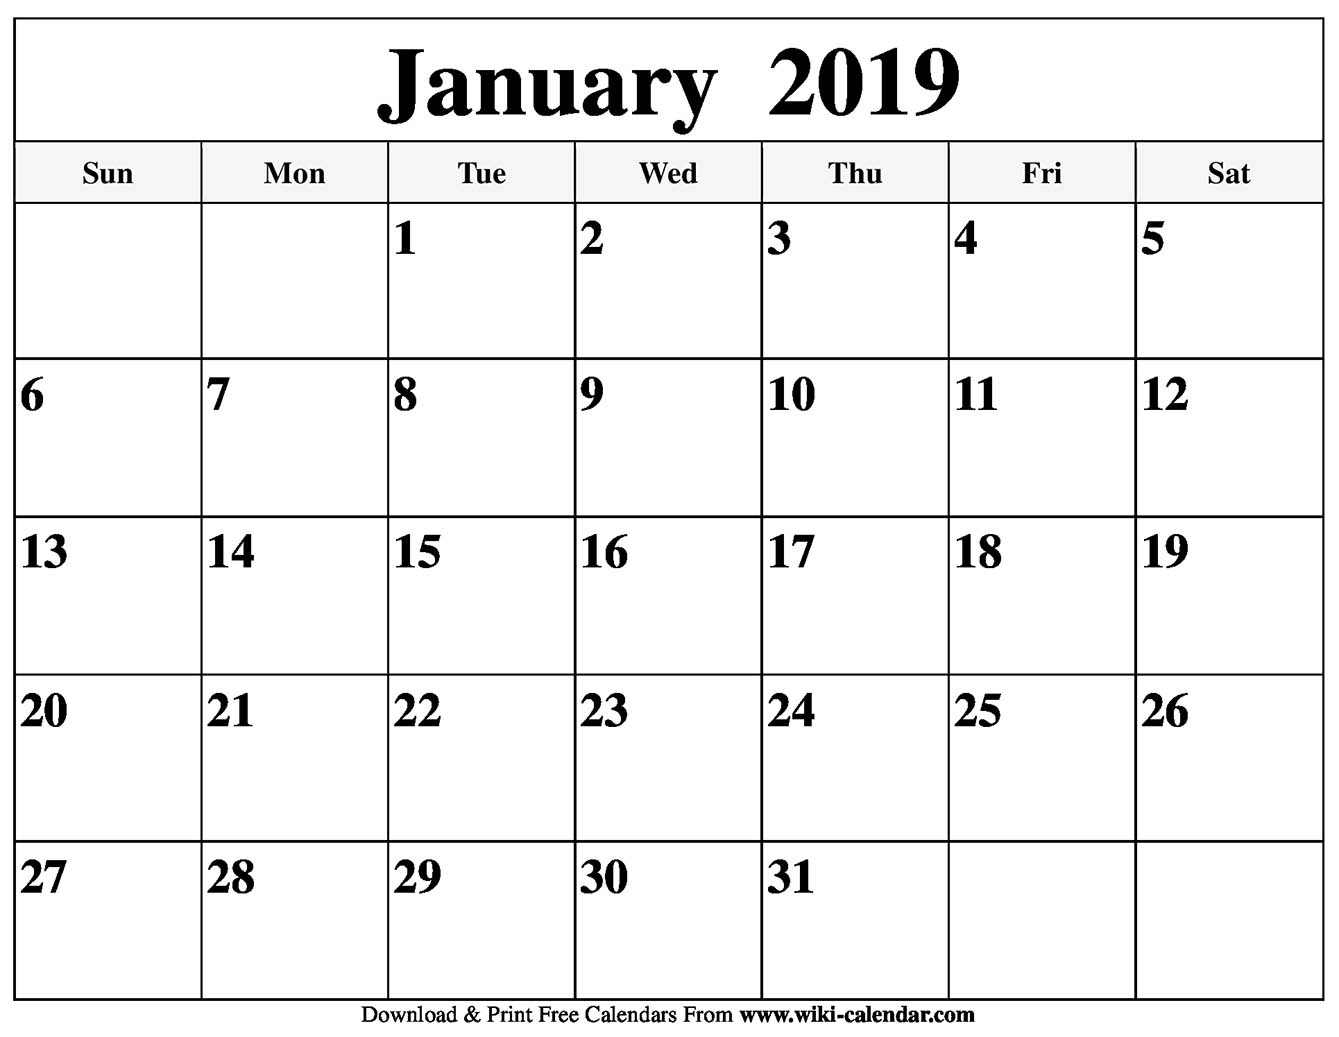 Calendar 2019 January Month